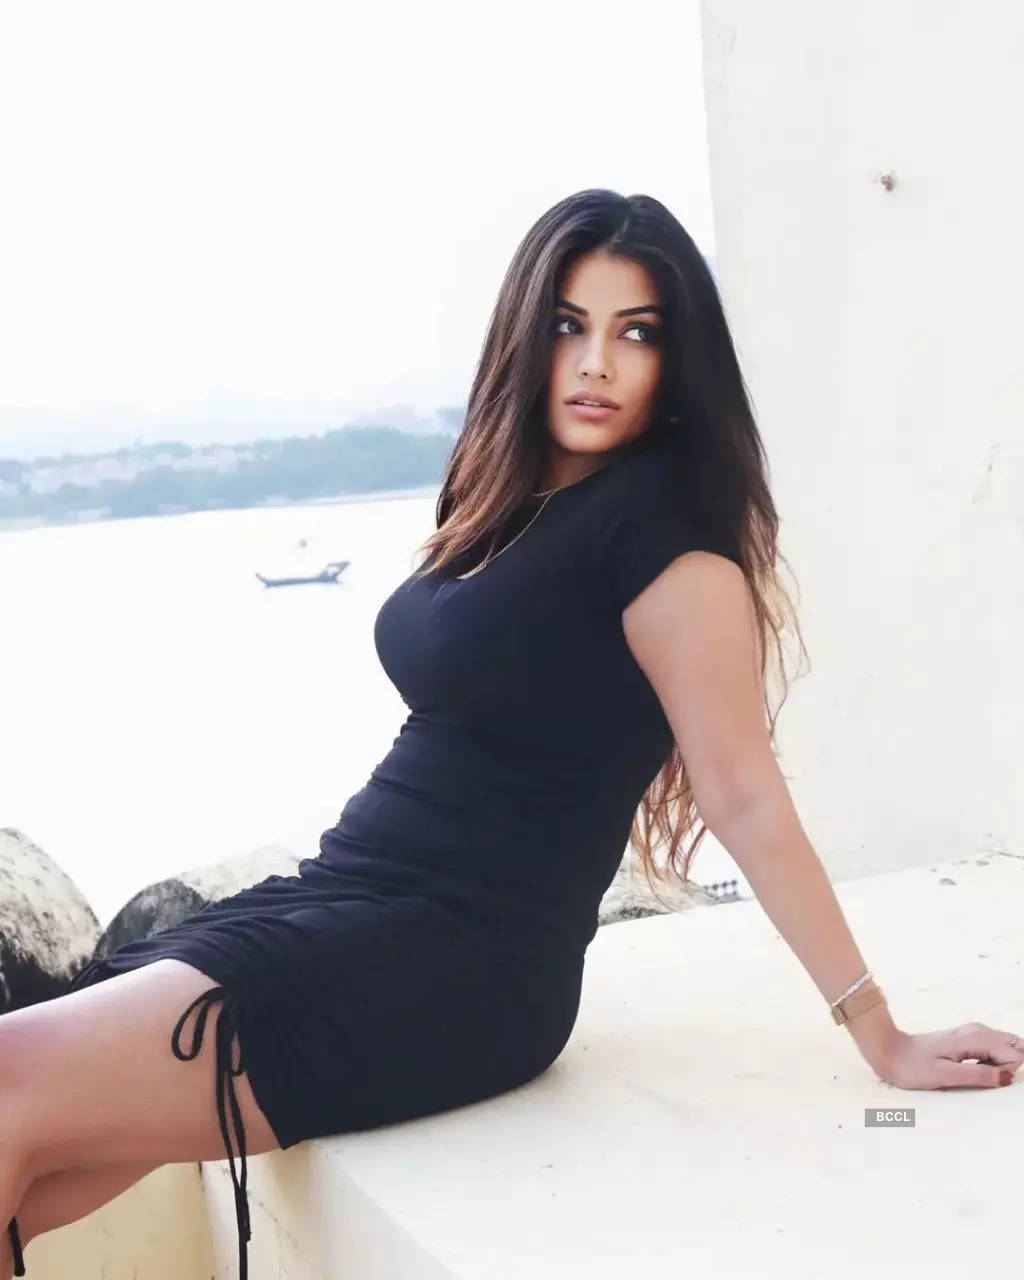 Scintillating photoshoot pics of ‘Operation Mayfair’ star Anjali Sharma